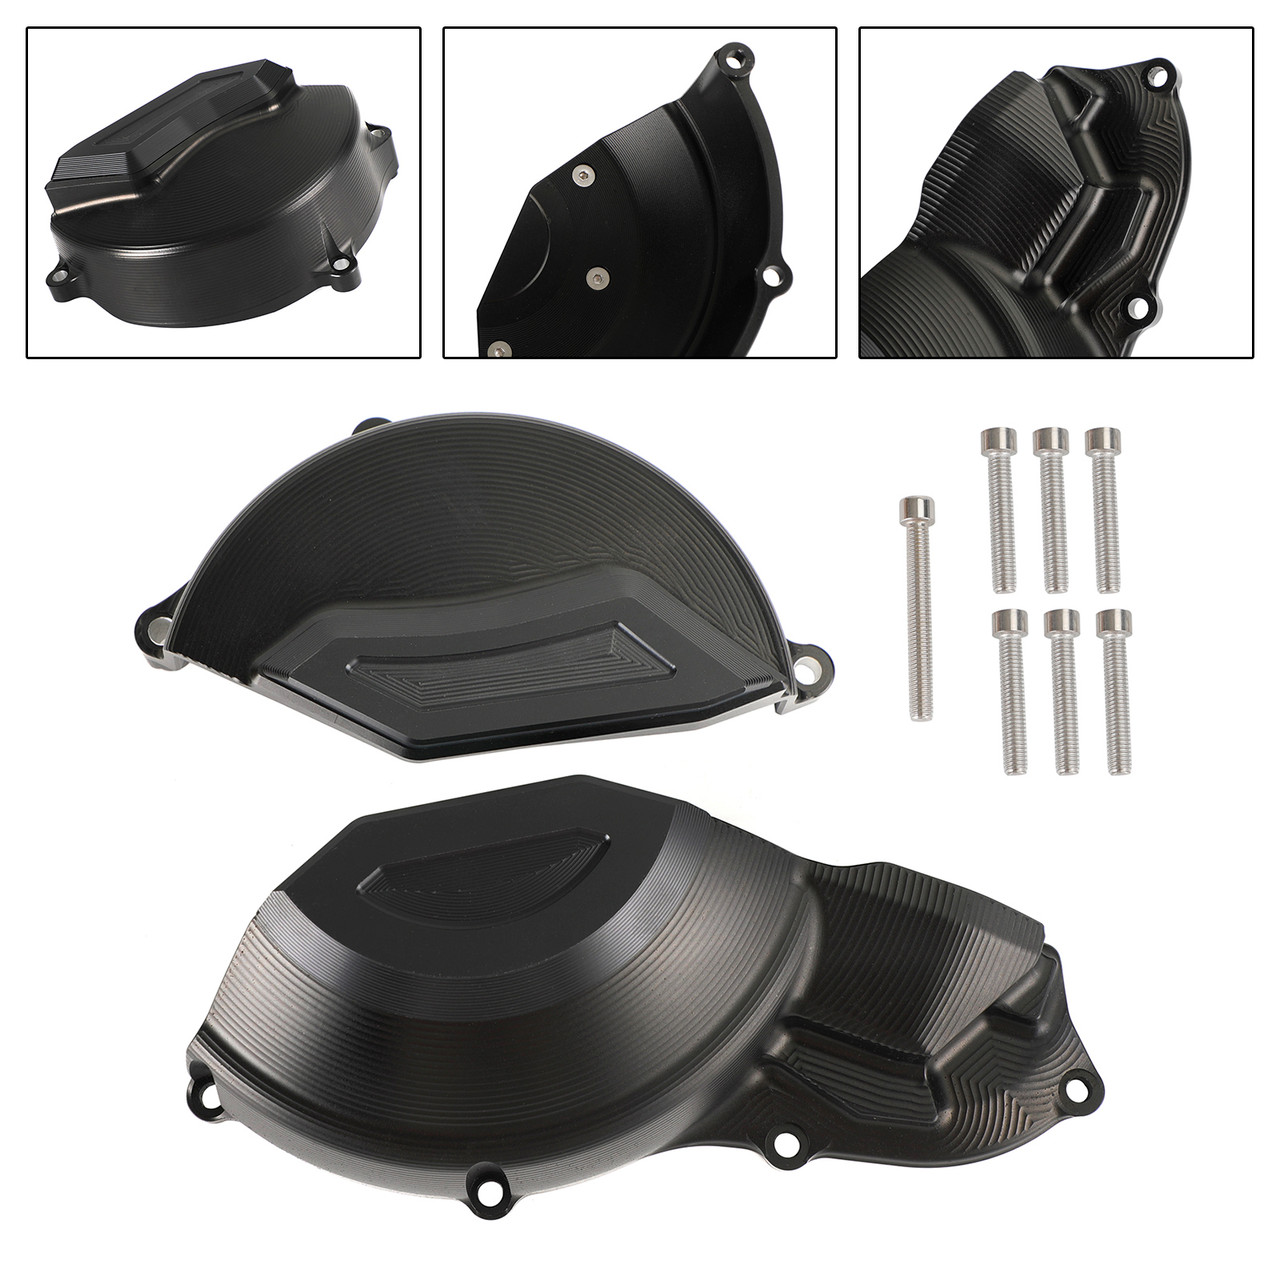 Stator Engine Cover Fairing Protector Plastic Black For Aprilia Rs 660 20-22 21